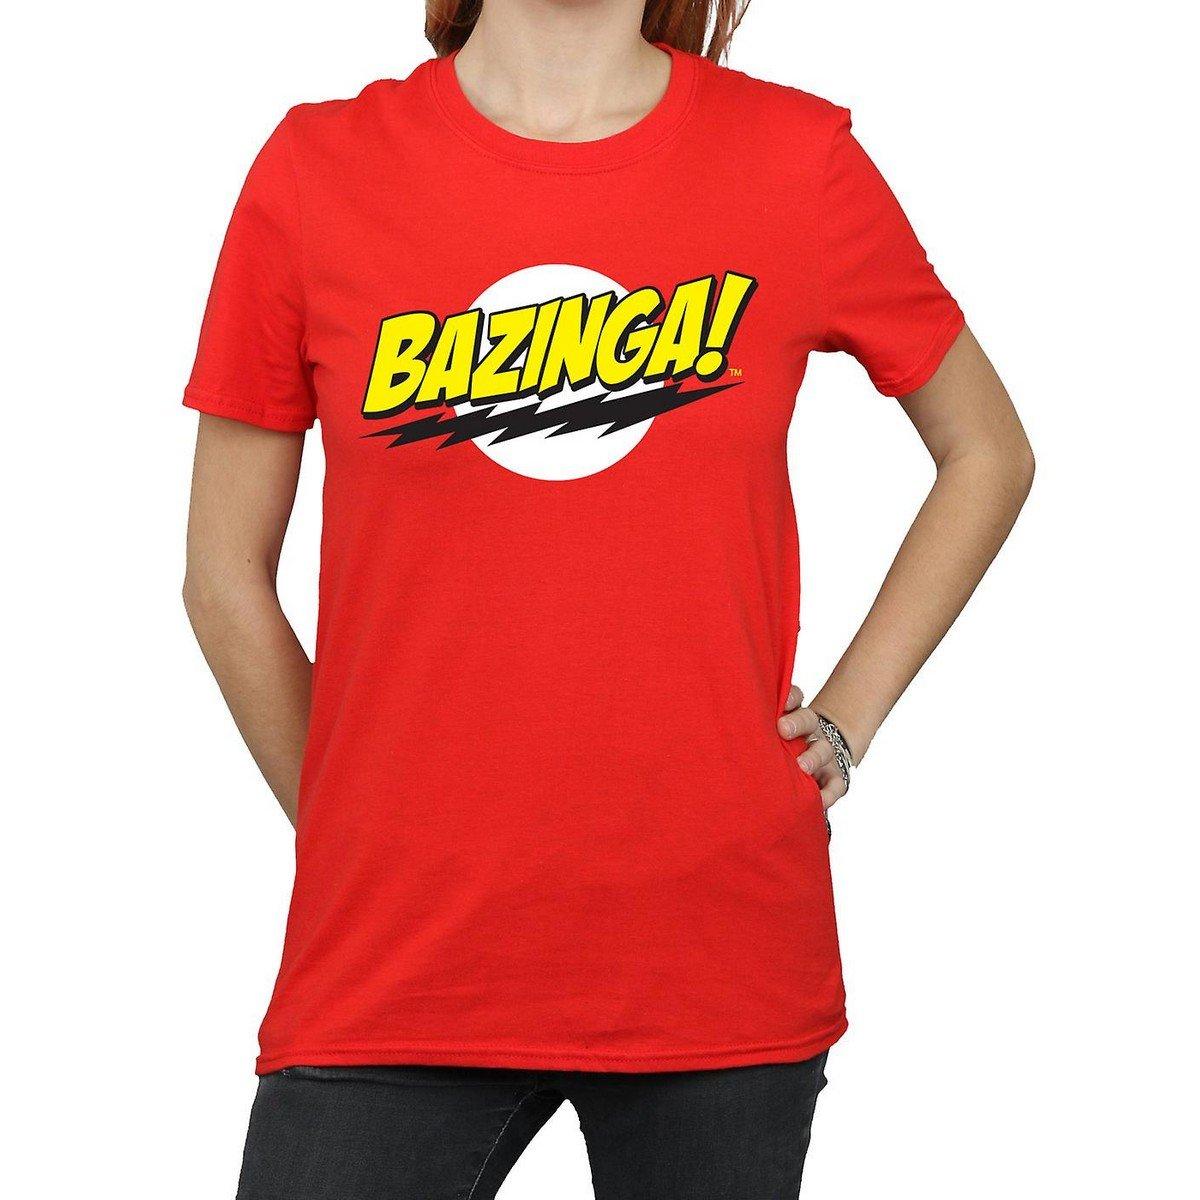 Bazinga Tshirt Damen Rot Bunt 3XL von The Big Bang Theory